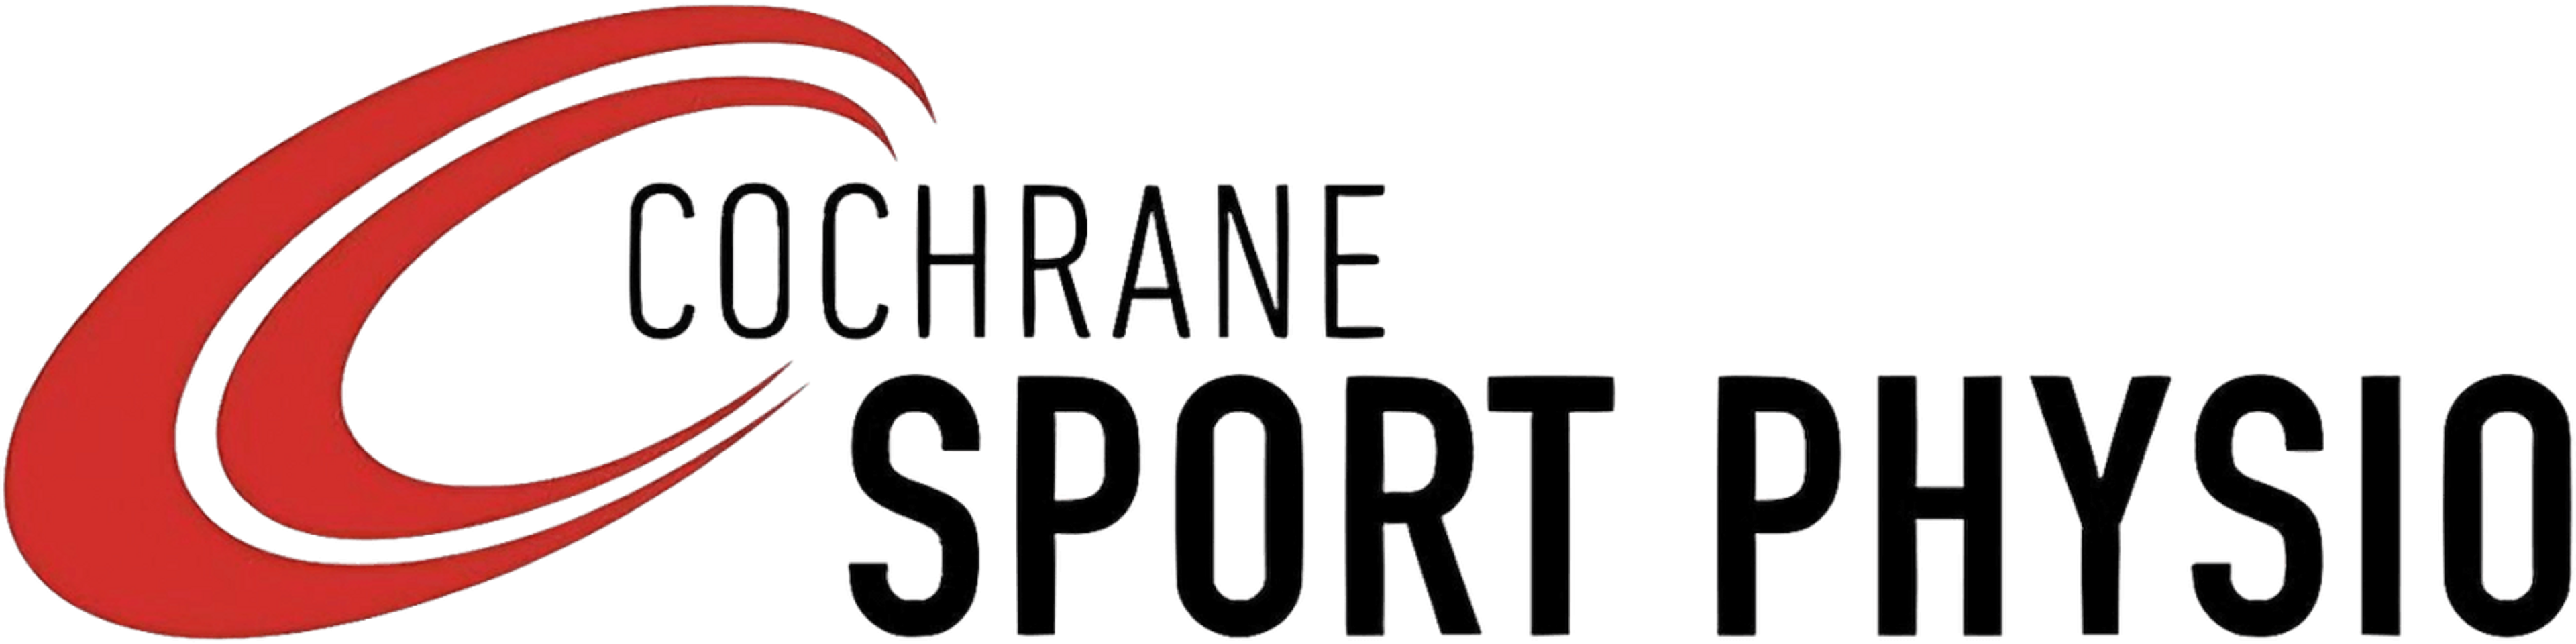 Cochrane Sport Physio logo on a transparent background